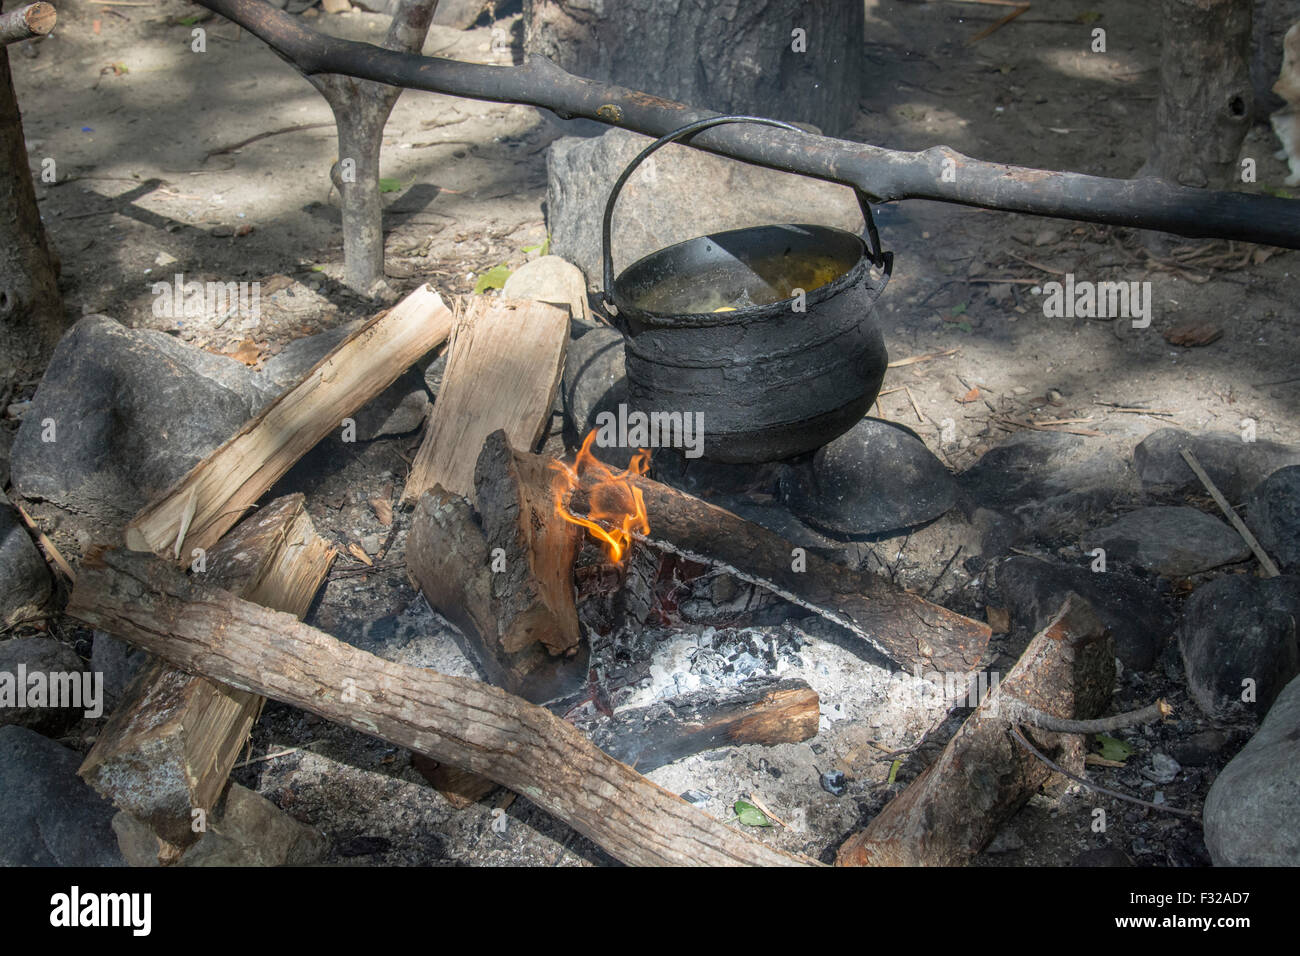 Einen kochenden Topf über dem offenen Feuer, Plimouth Plantage, Plymouth, Massachusetts, USA Stockfoto